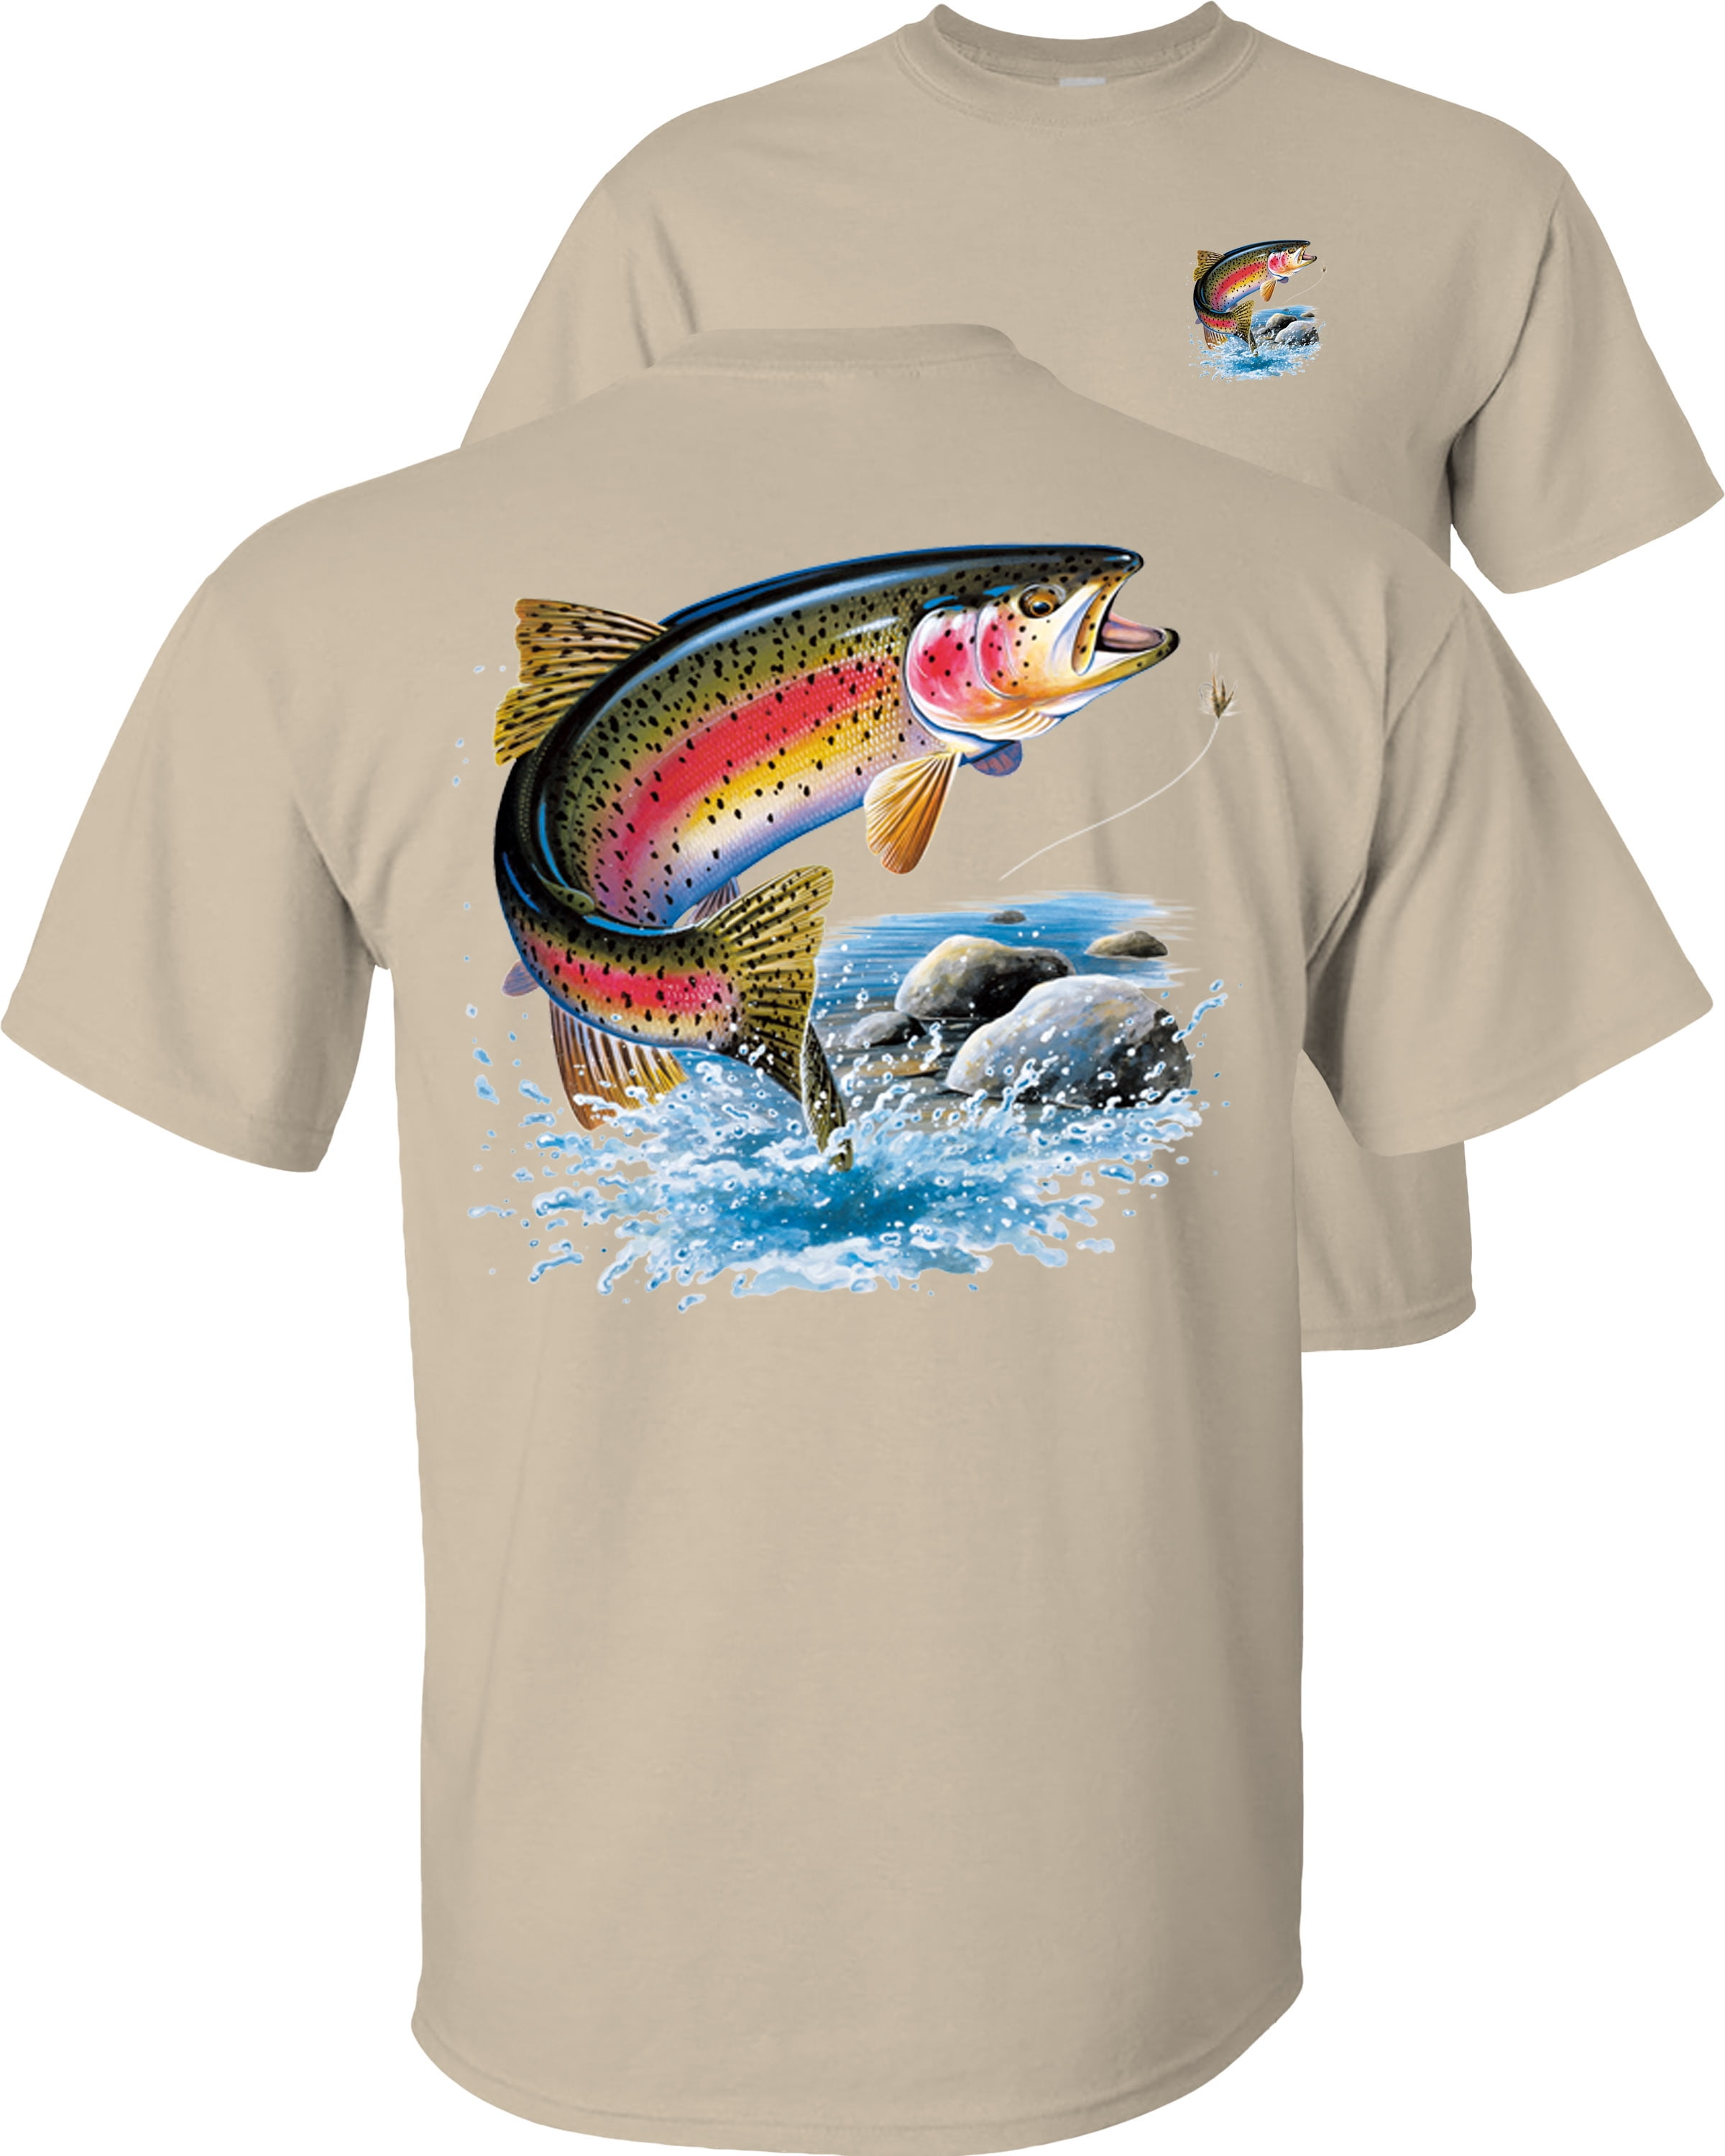 Fair Game Rainbow Trout Fishing T-Shirt, fly fishing, Fishing Graphic  Tee-White-XL 